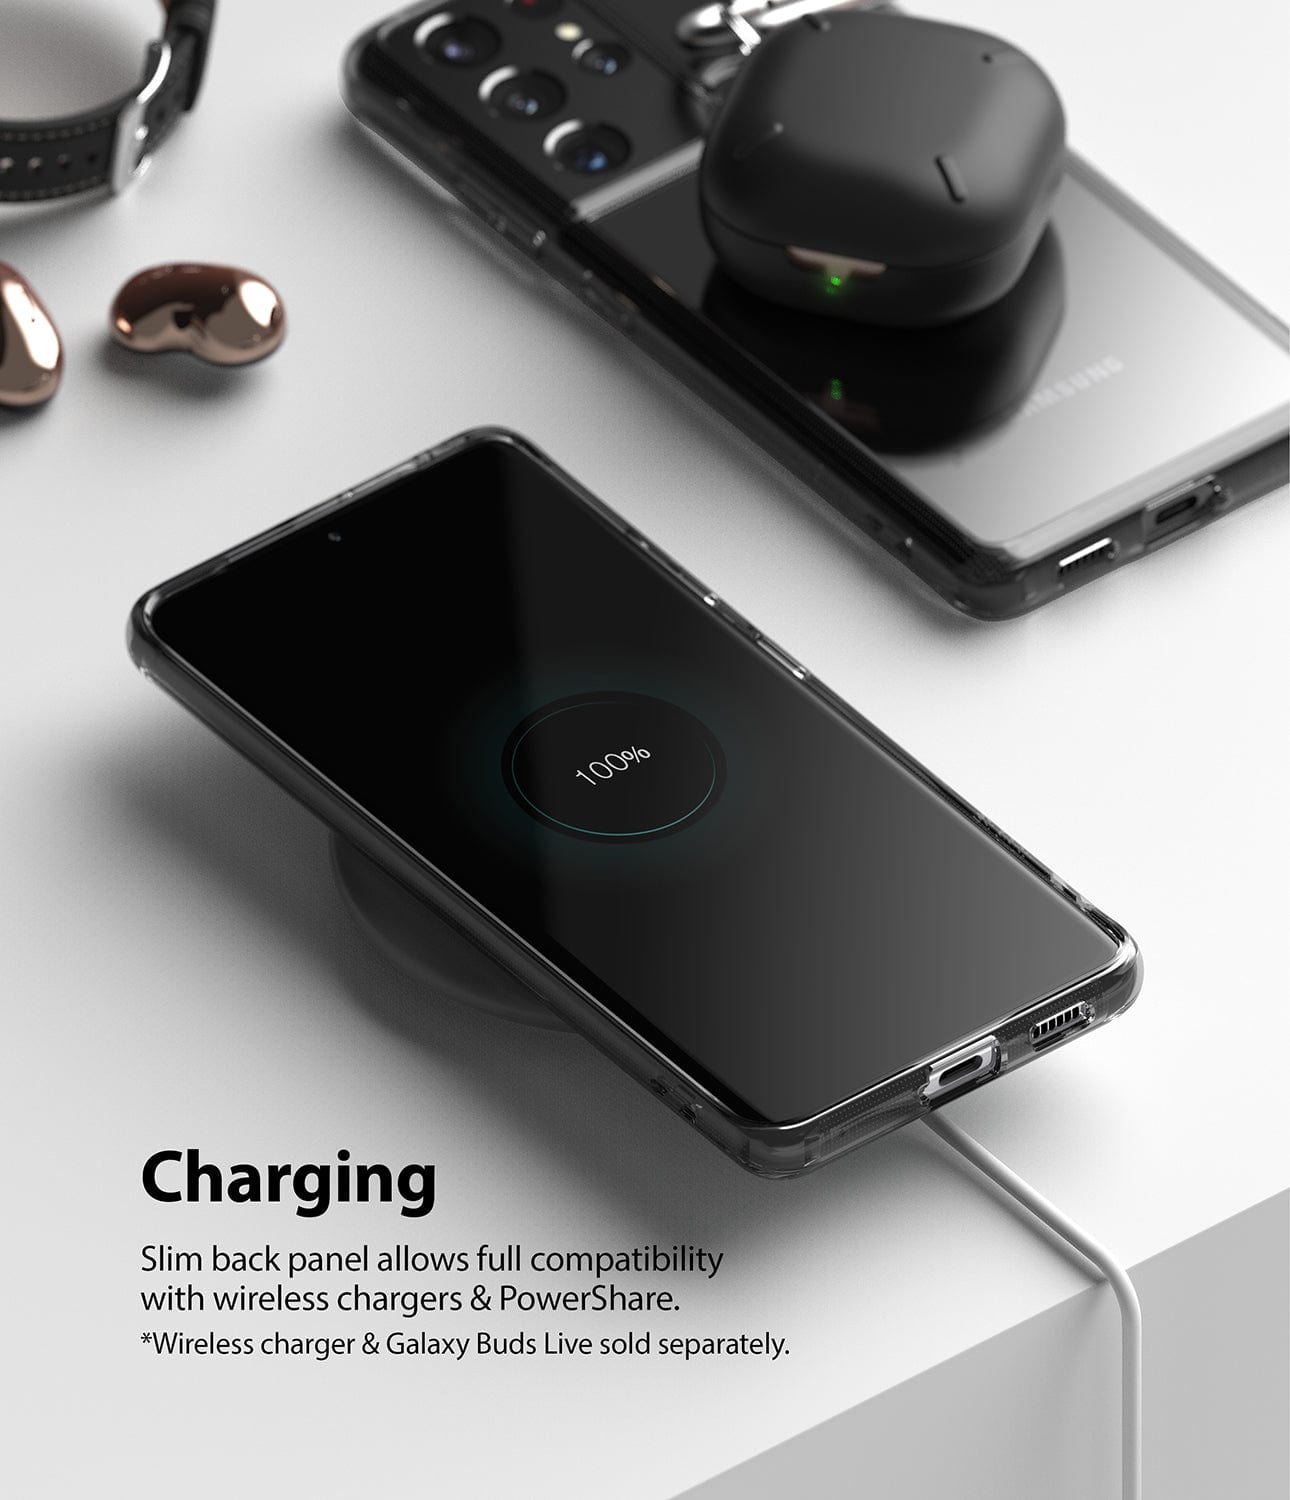 Samsung Galaxy S21 Ultra Case ( Clear ) - Ringke FUSION X